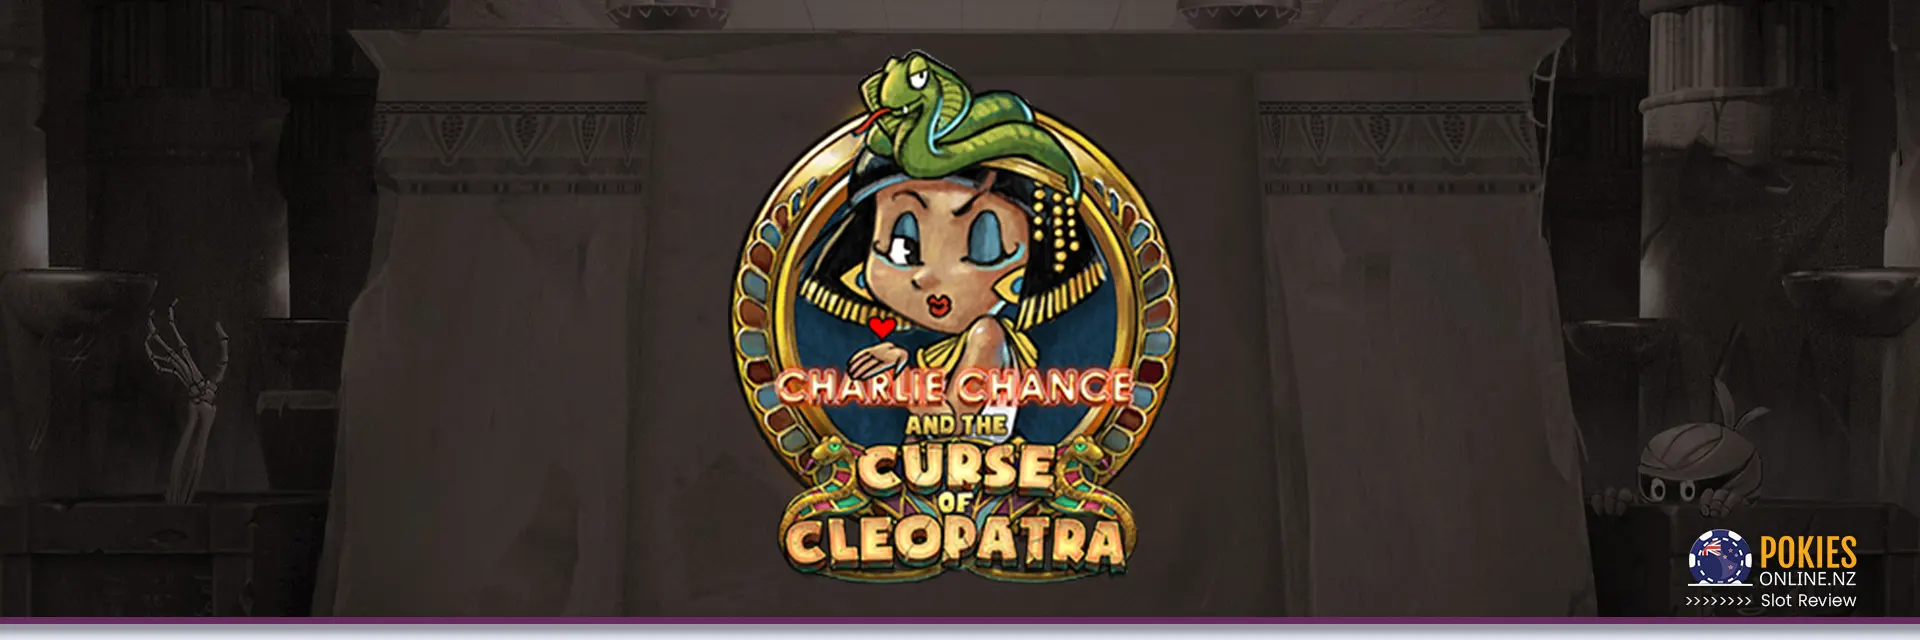 Charlie Chase Cleopatra slot Banner